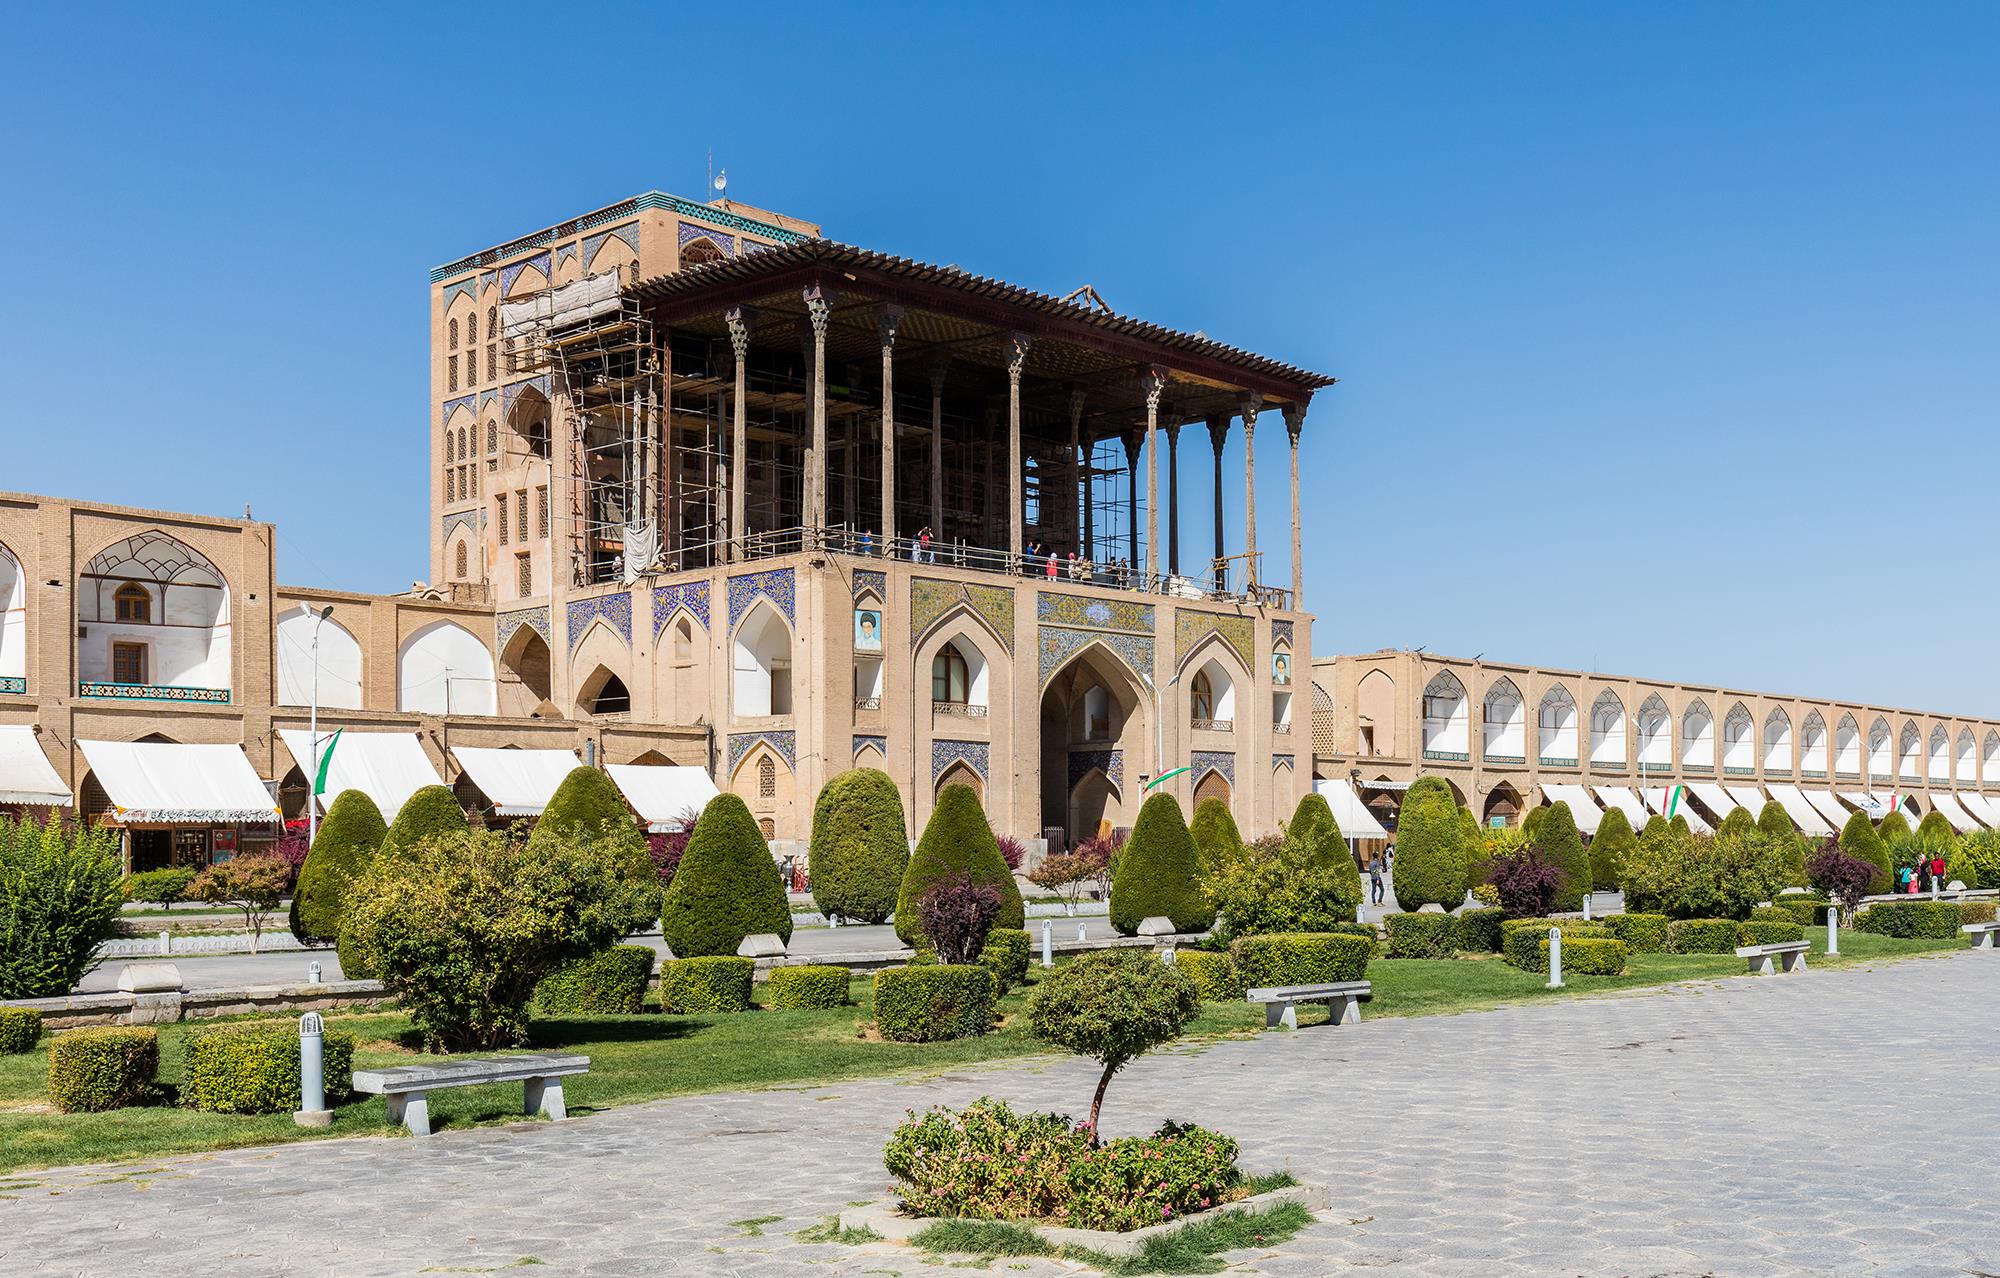 Aali Qapo Palace in naghsh jahan